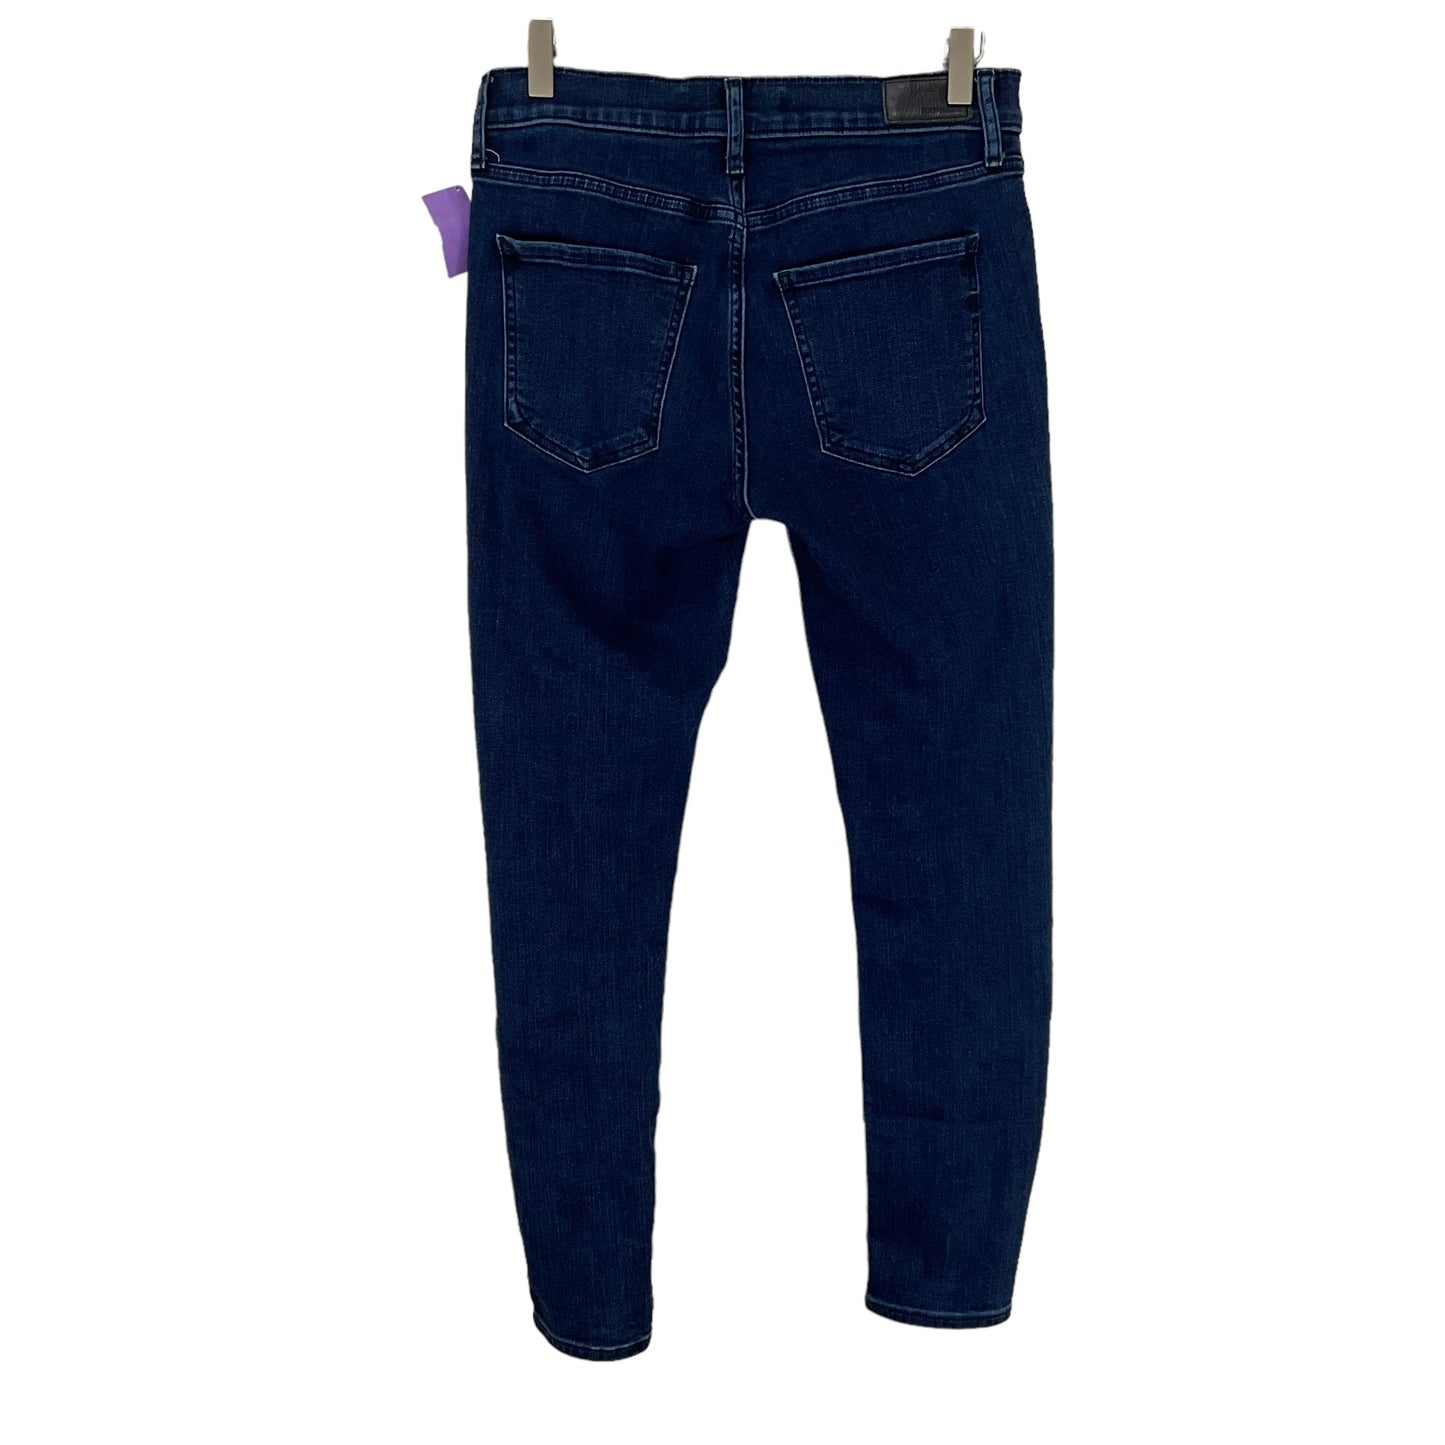 Blue Denim Jeans Skinny Express, Size 8